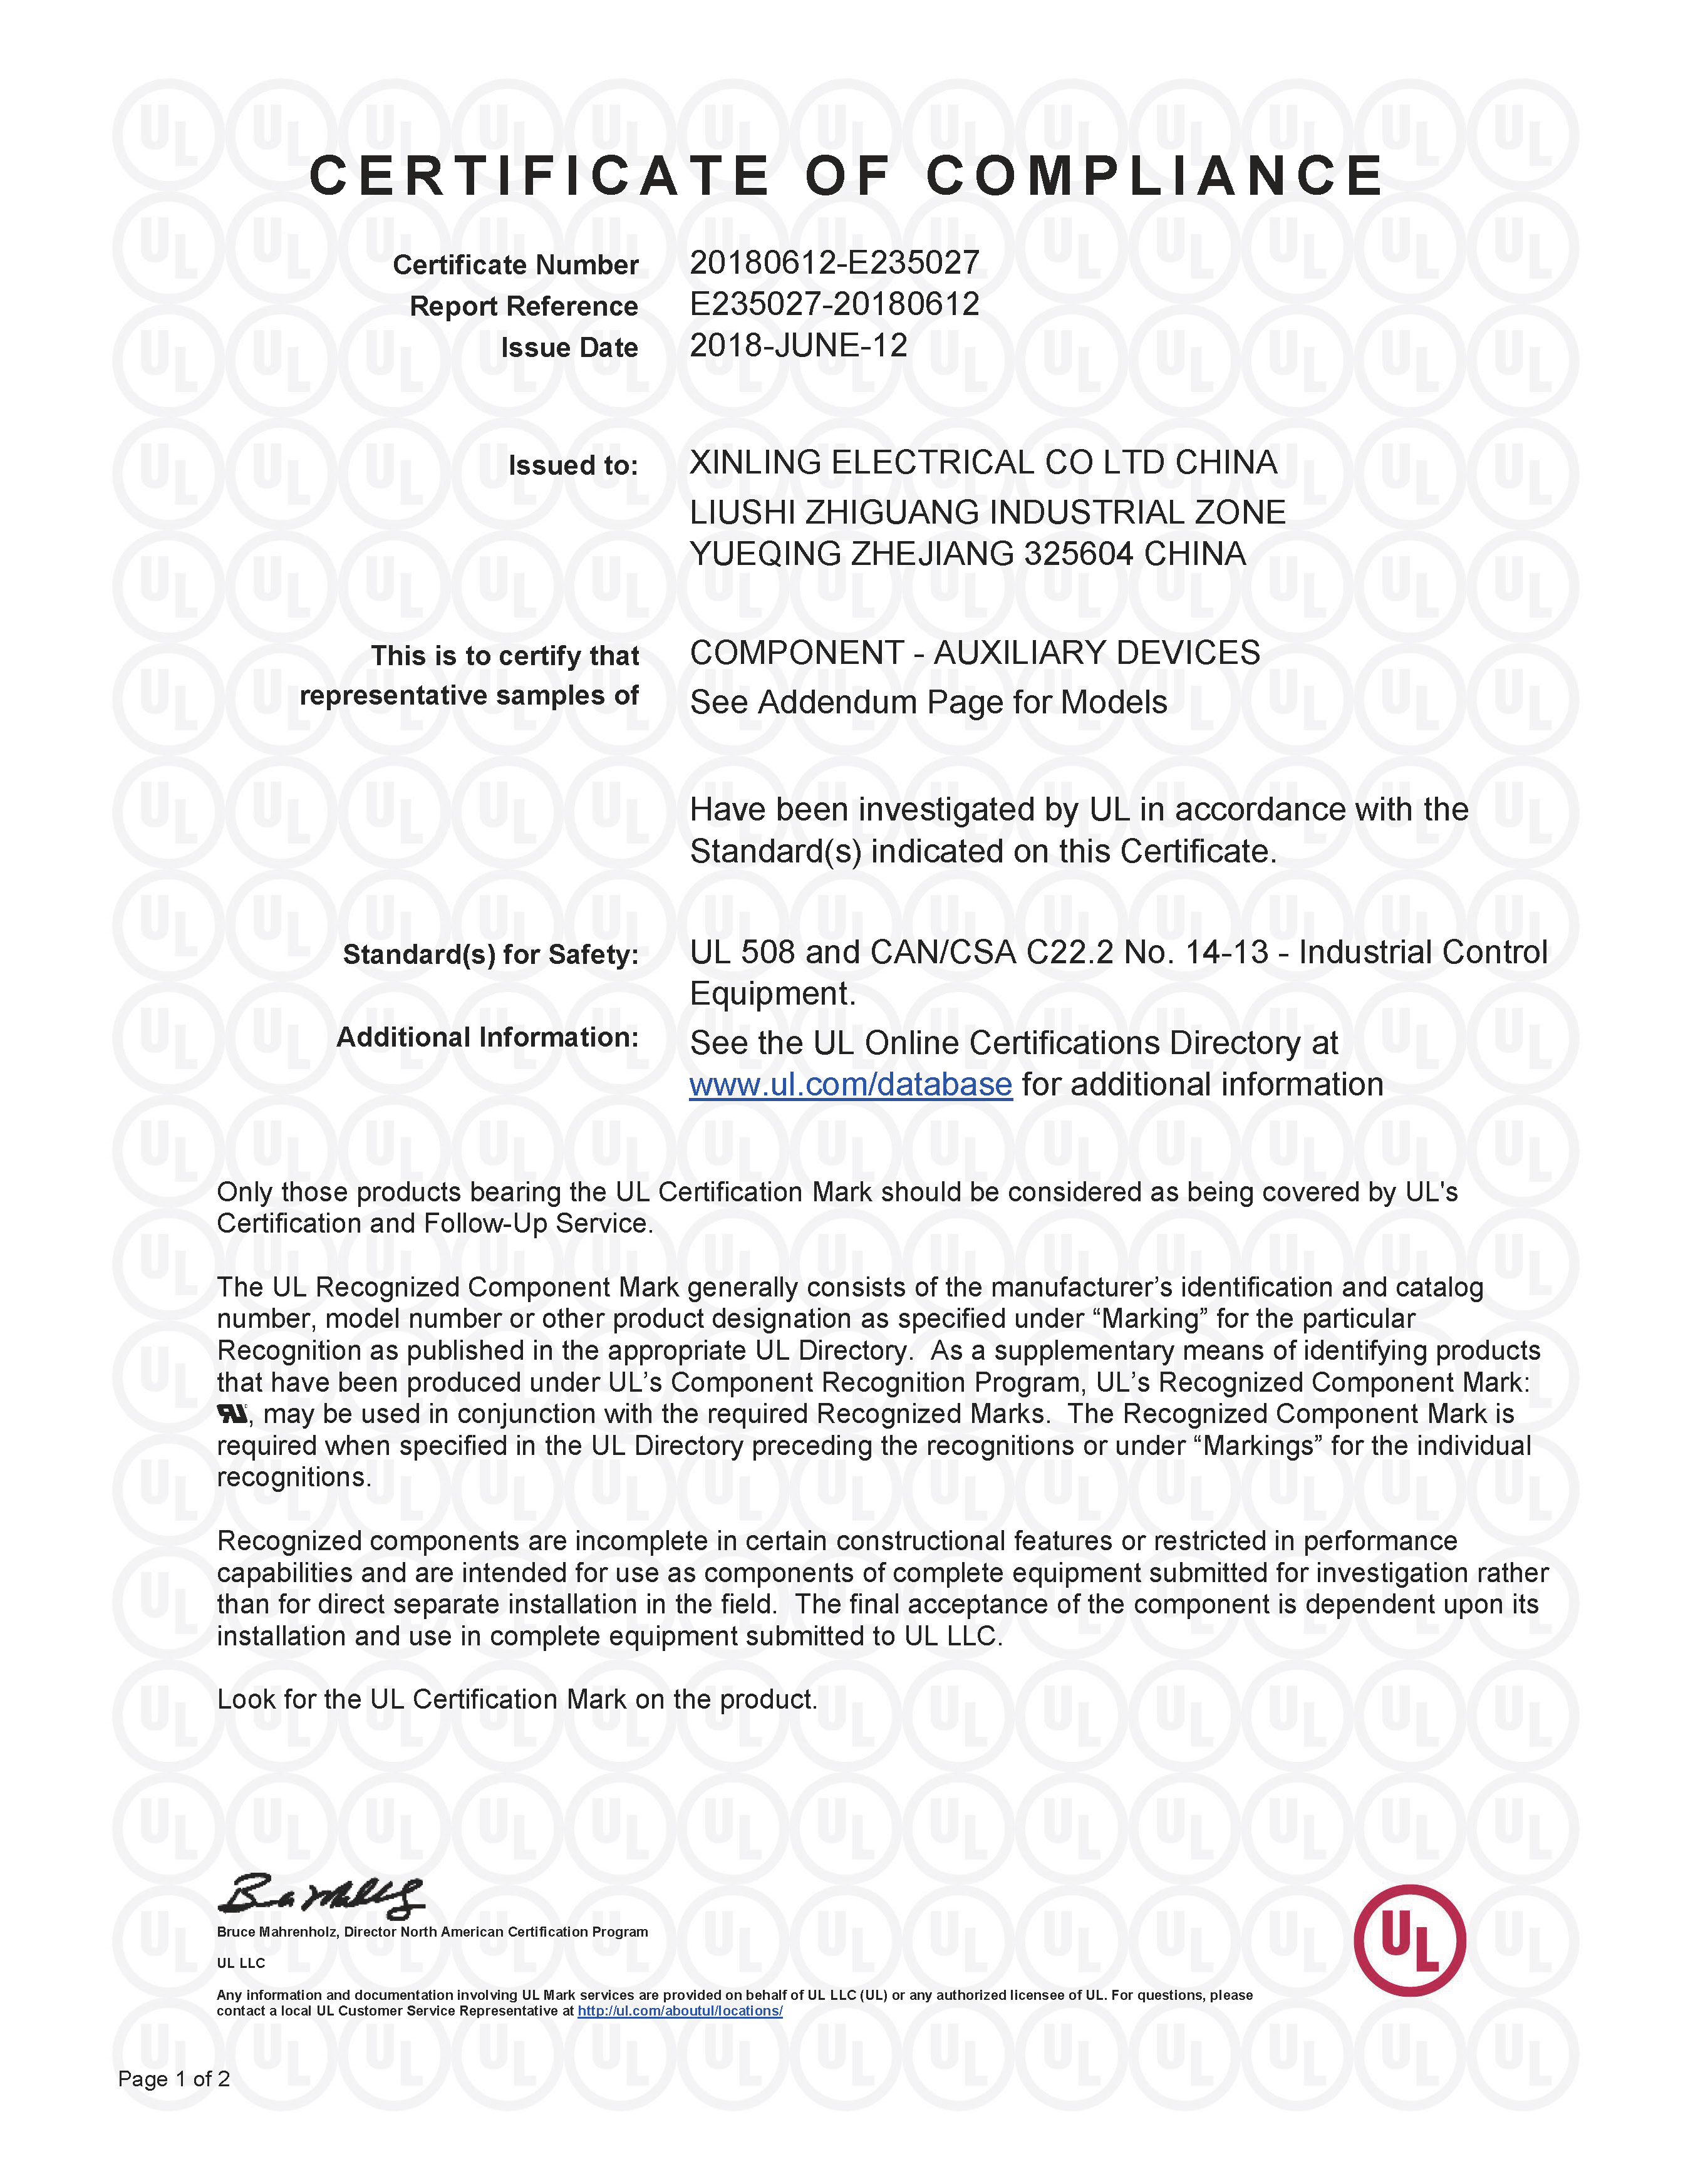 E235027-20180612-CertificateofCompliance_页面_1